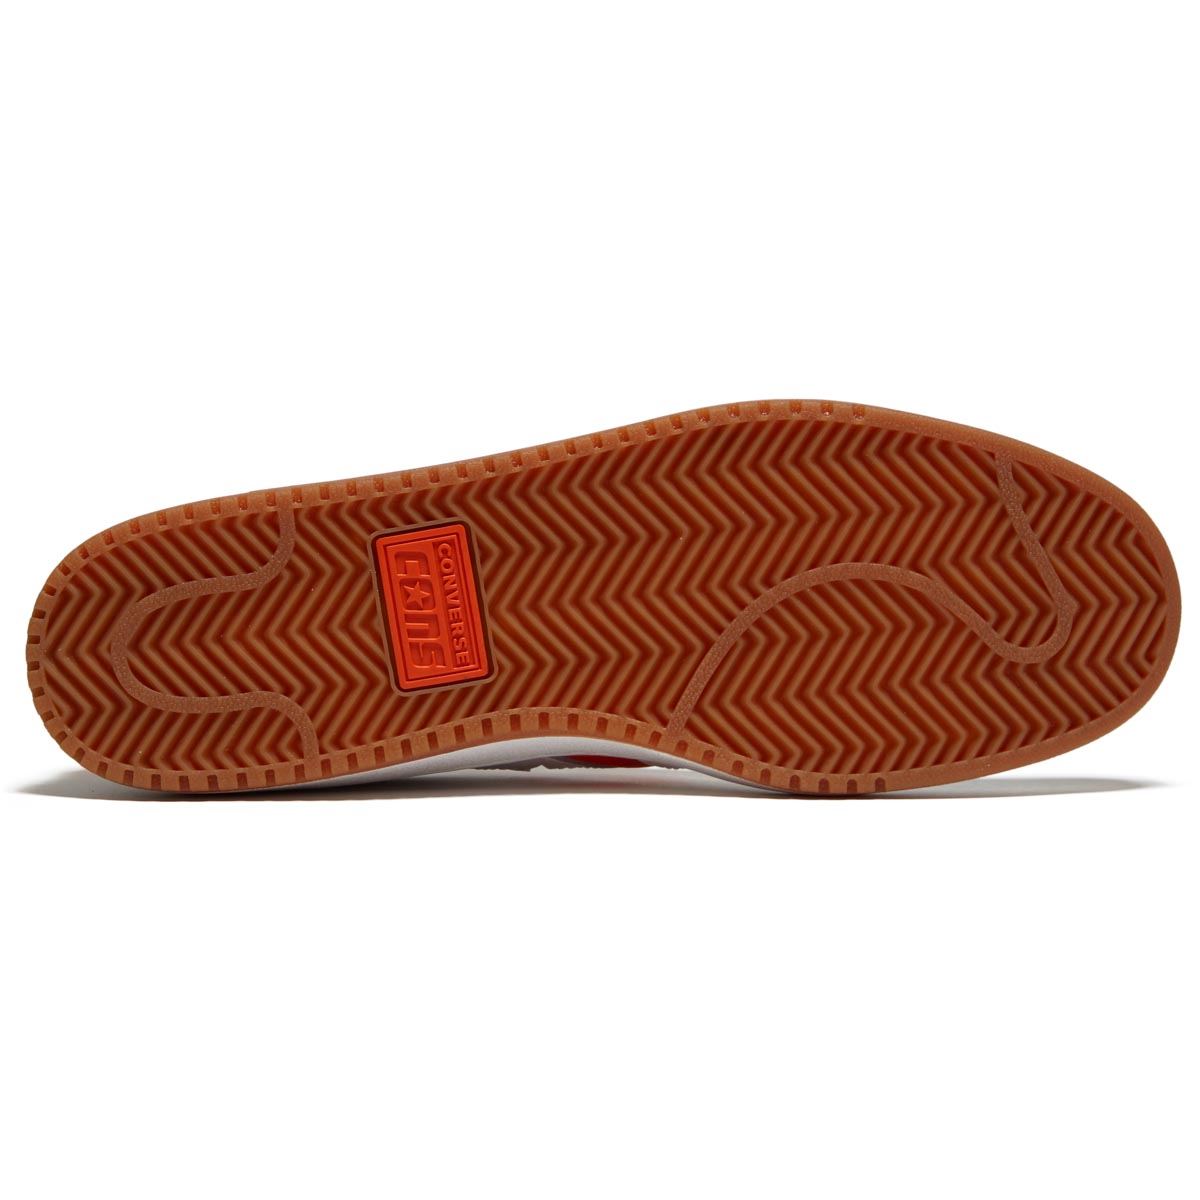 Converse AS-1 Pro Leather Ox Shoes - White/Orange/White image 4